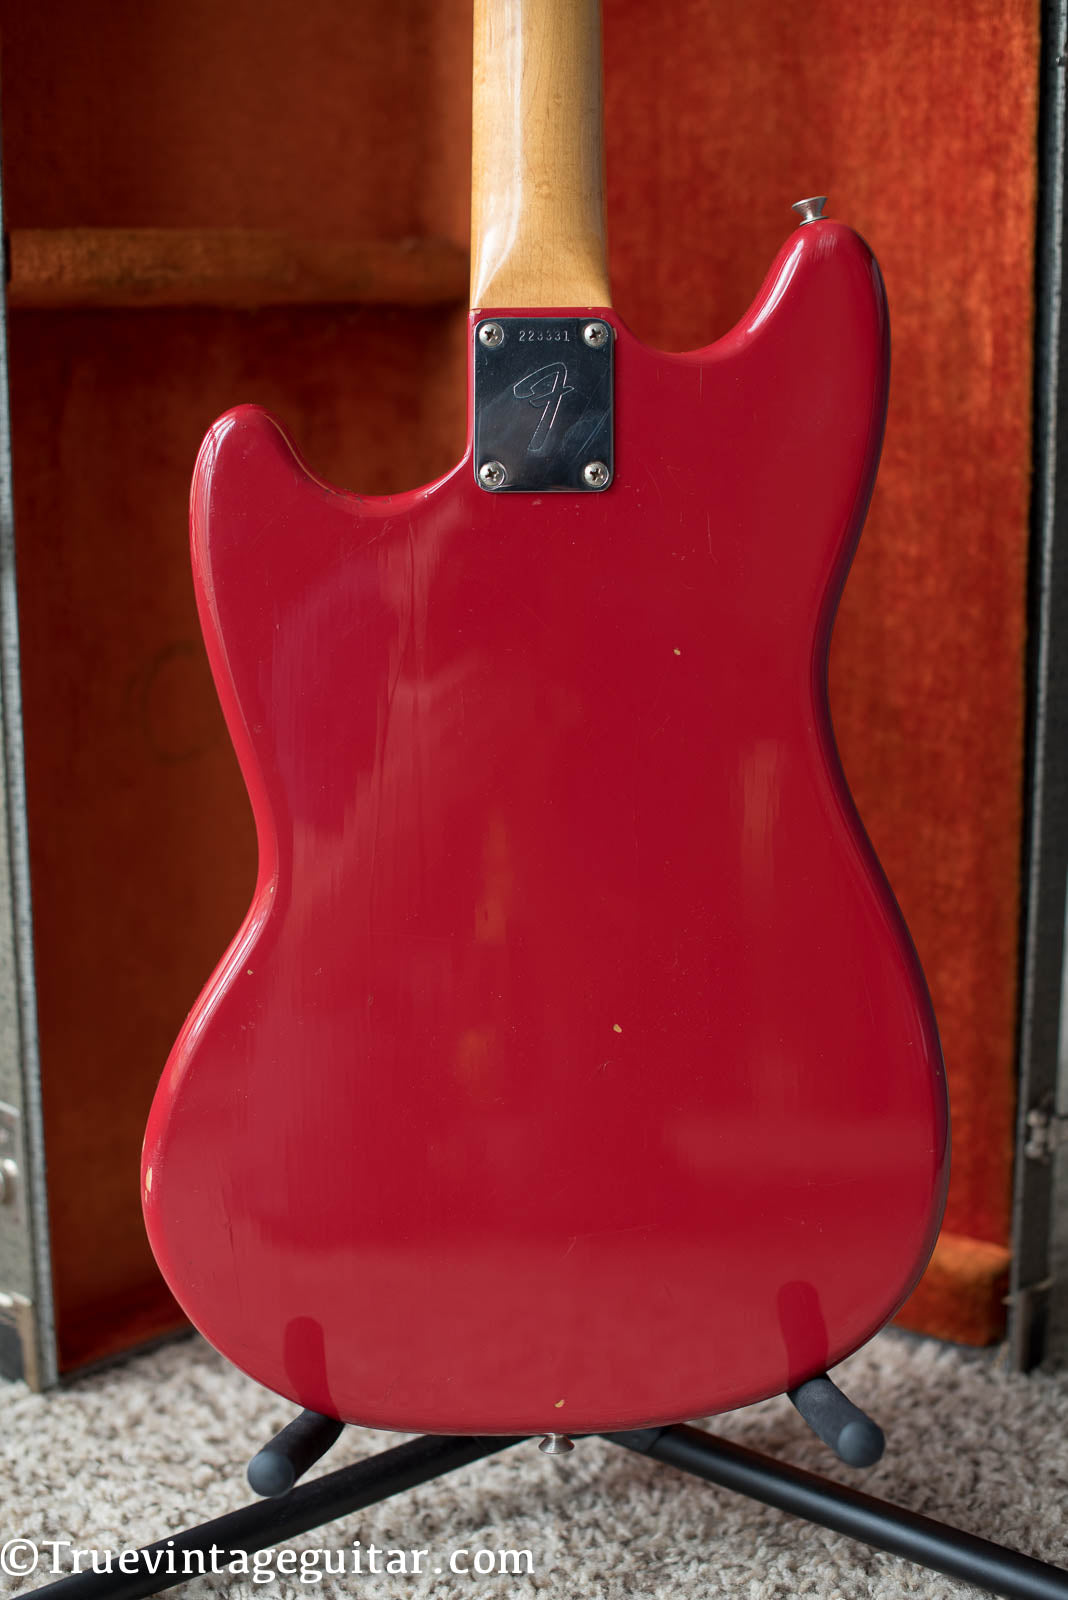 Fender Mustang guitar red 1968